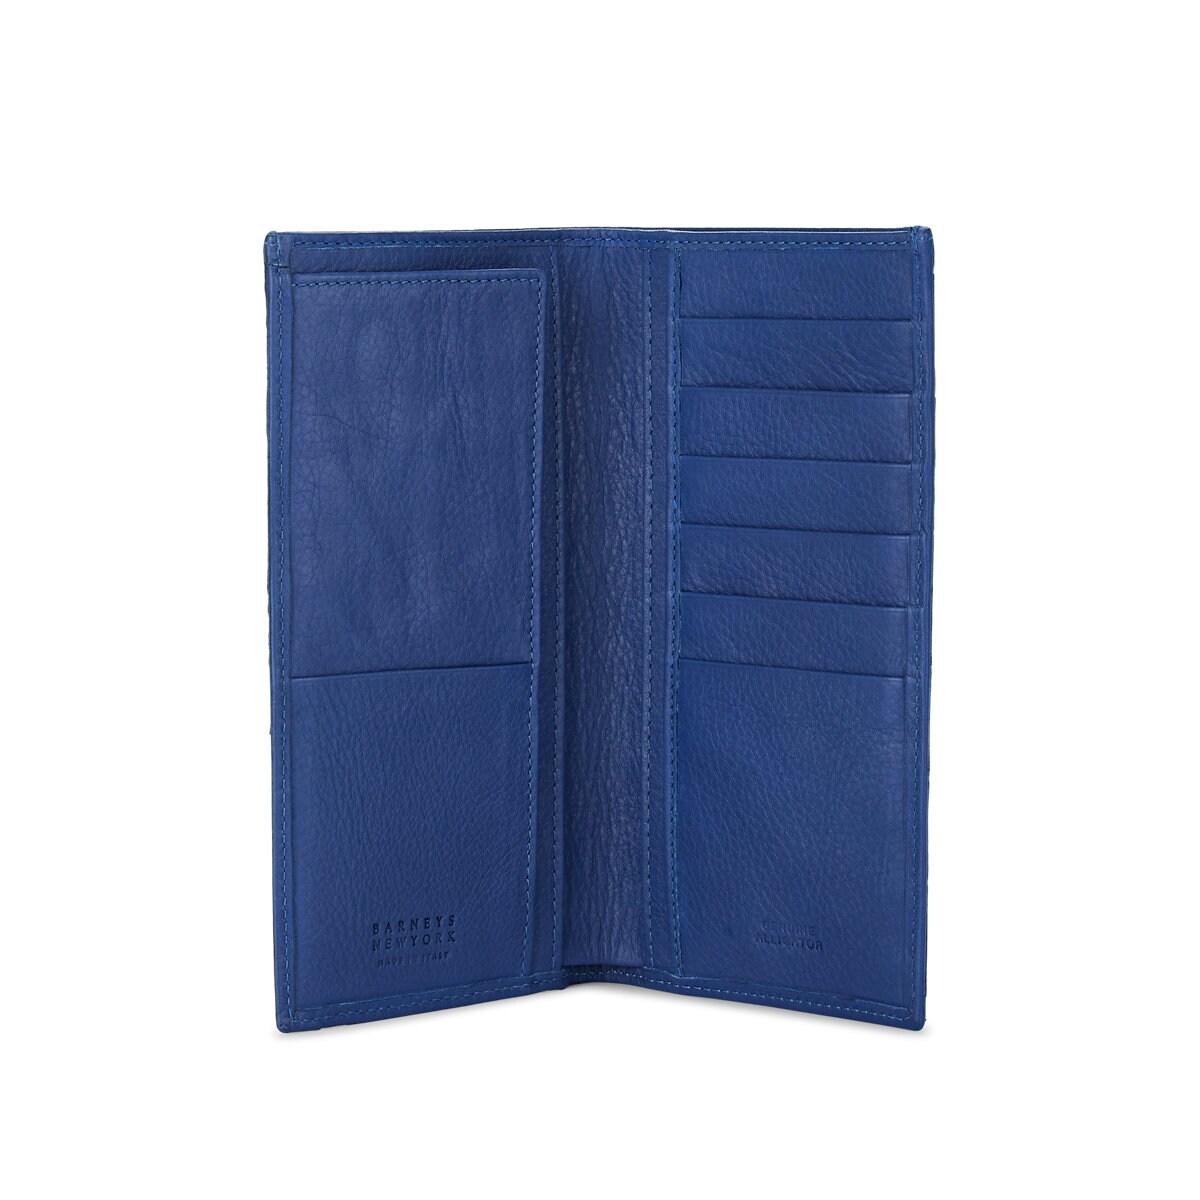 Barneys New York Leather Long Alligator Folding Wallet in Blue for Men - Lyst